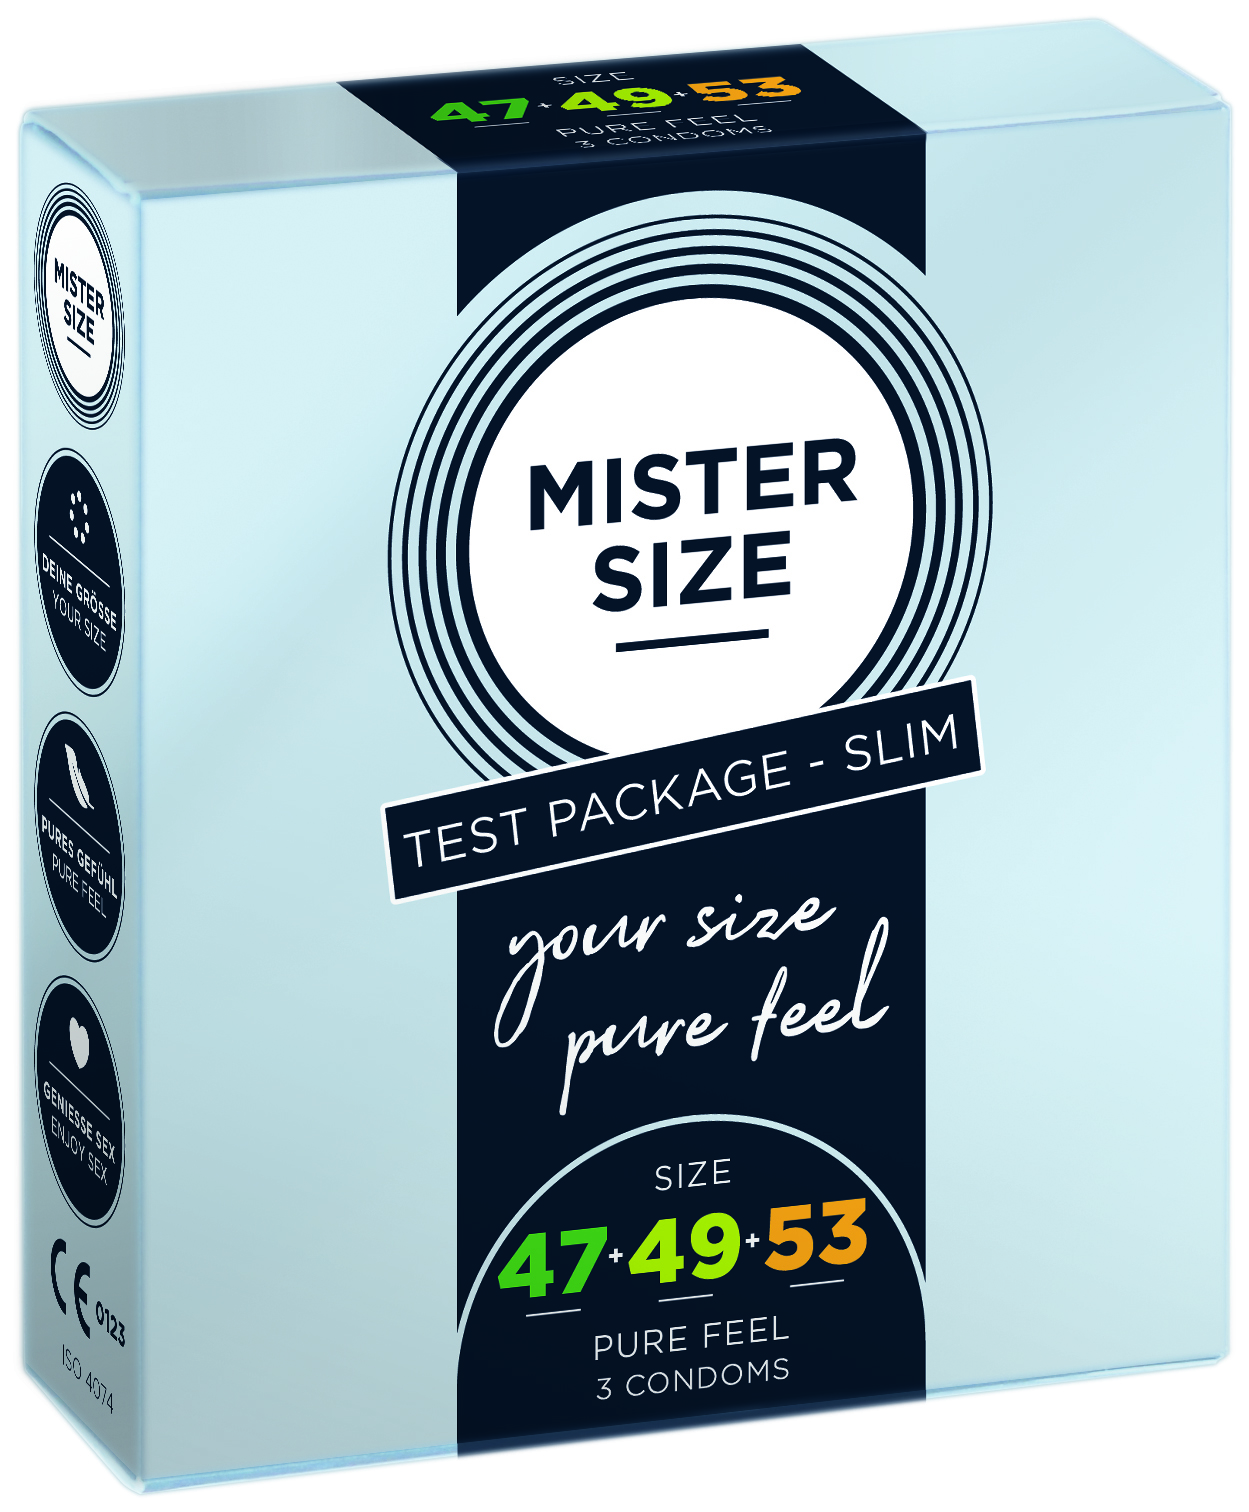 Mister Size Test Pack 47-49-53